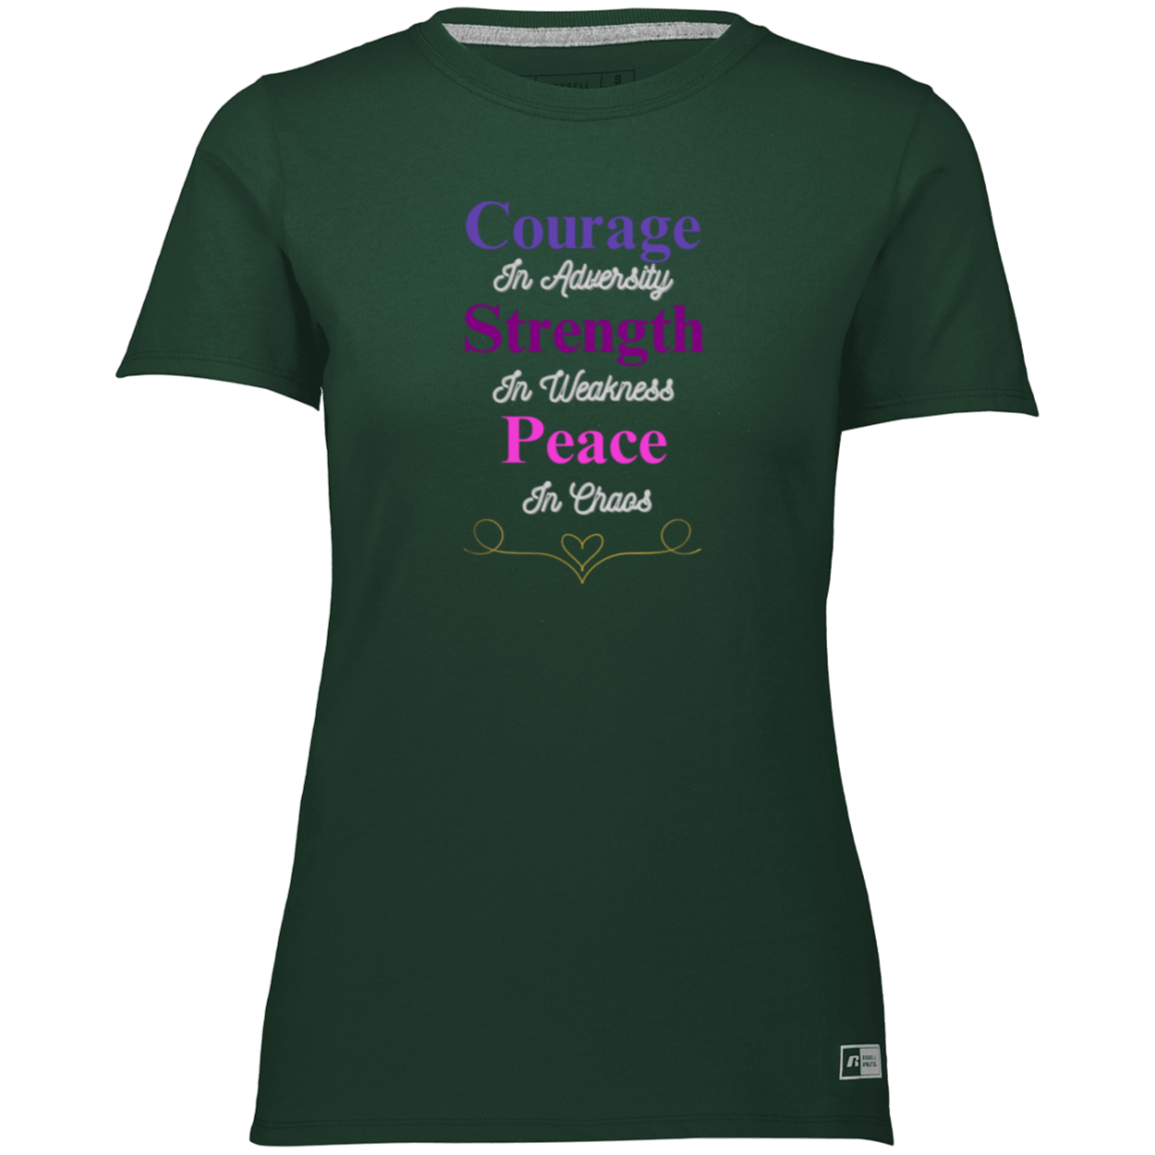 Courage in Adversity Women's T-Shirt| Women's Active Wear| Short Sleeve